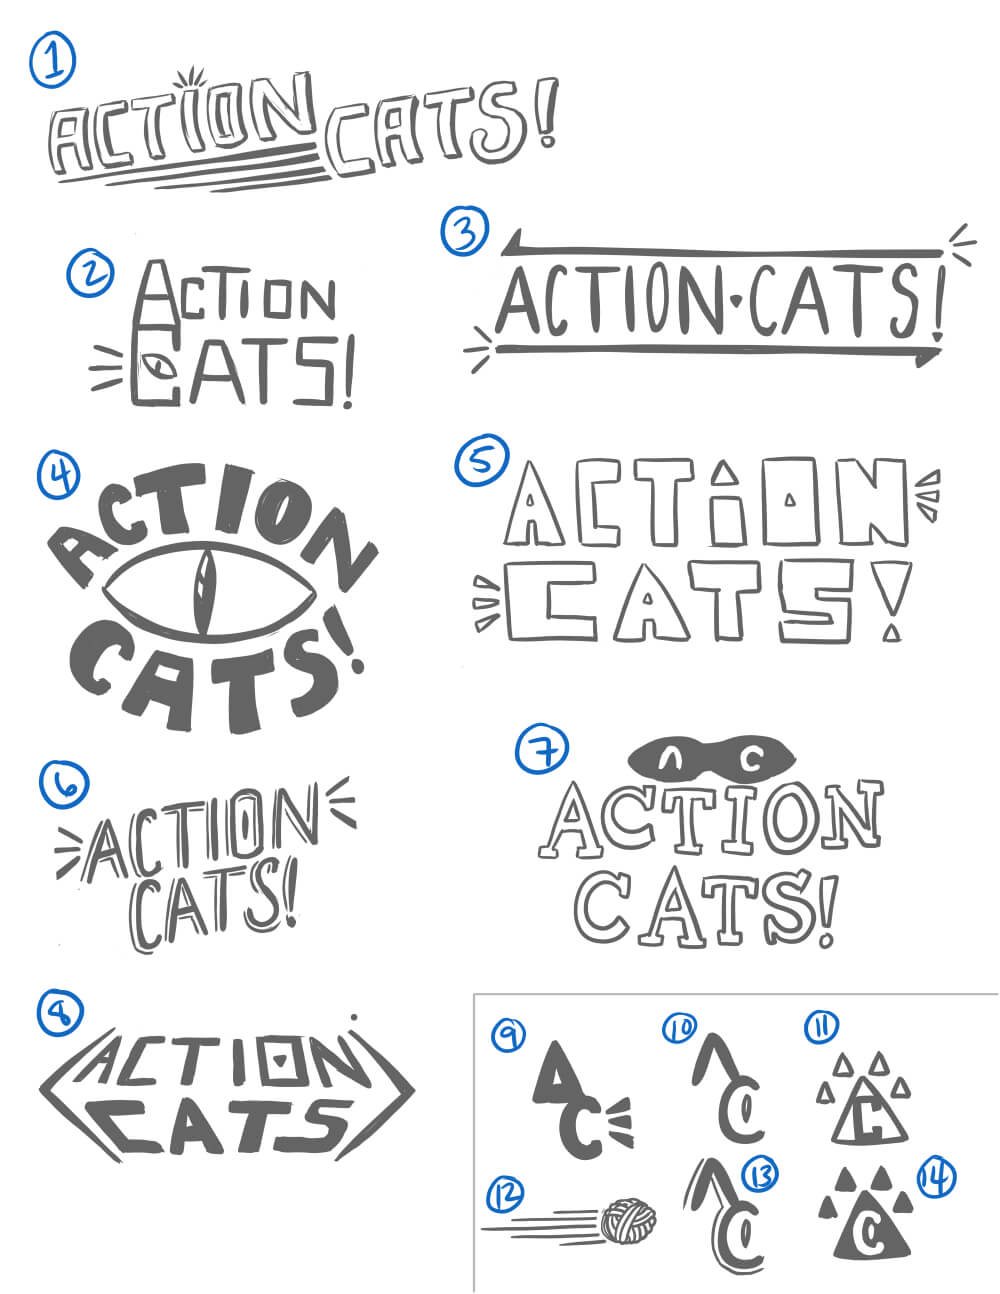 Action Cats logo sketches - v1